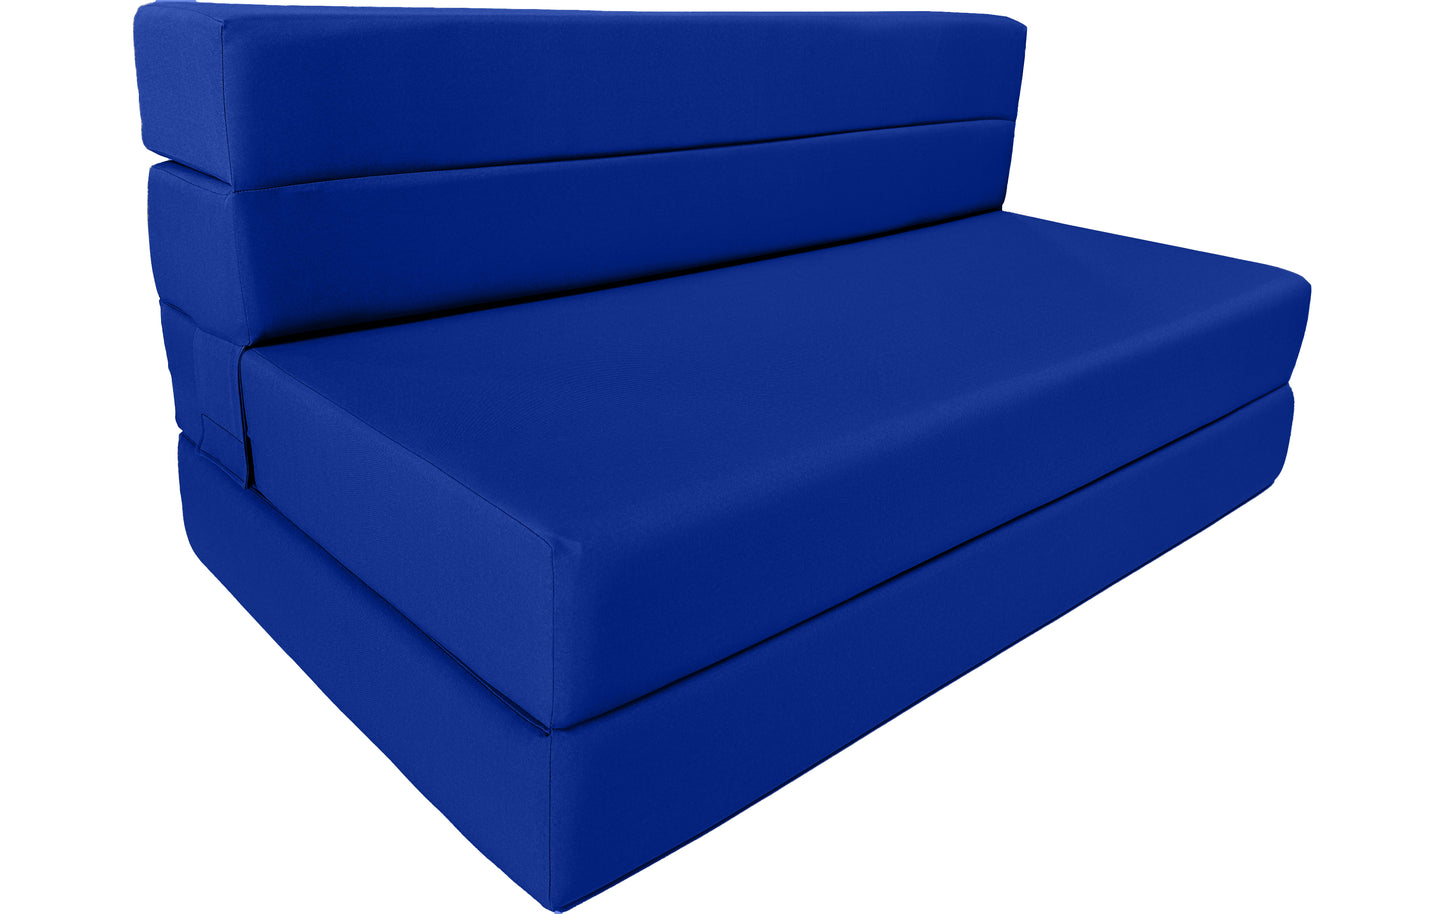 Folding Foam Mattresses, Foldable Chair Beds Lounger, Portable Sofa Bed 80 x 39 x 6